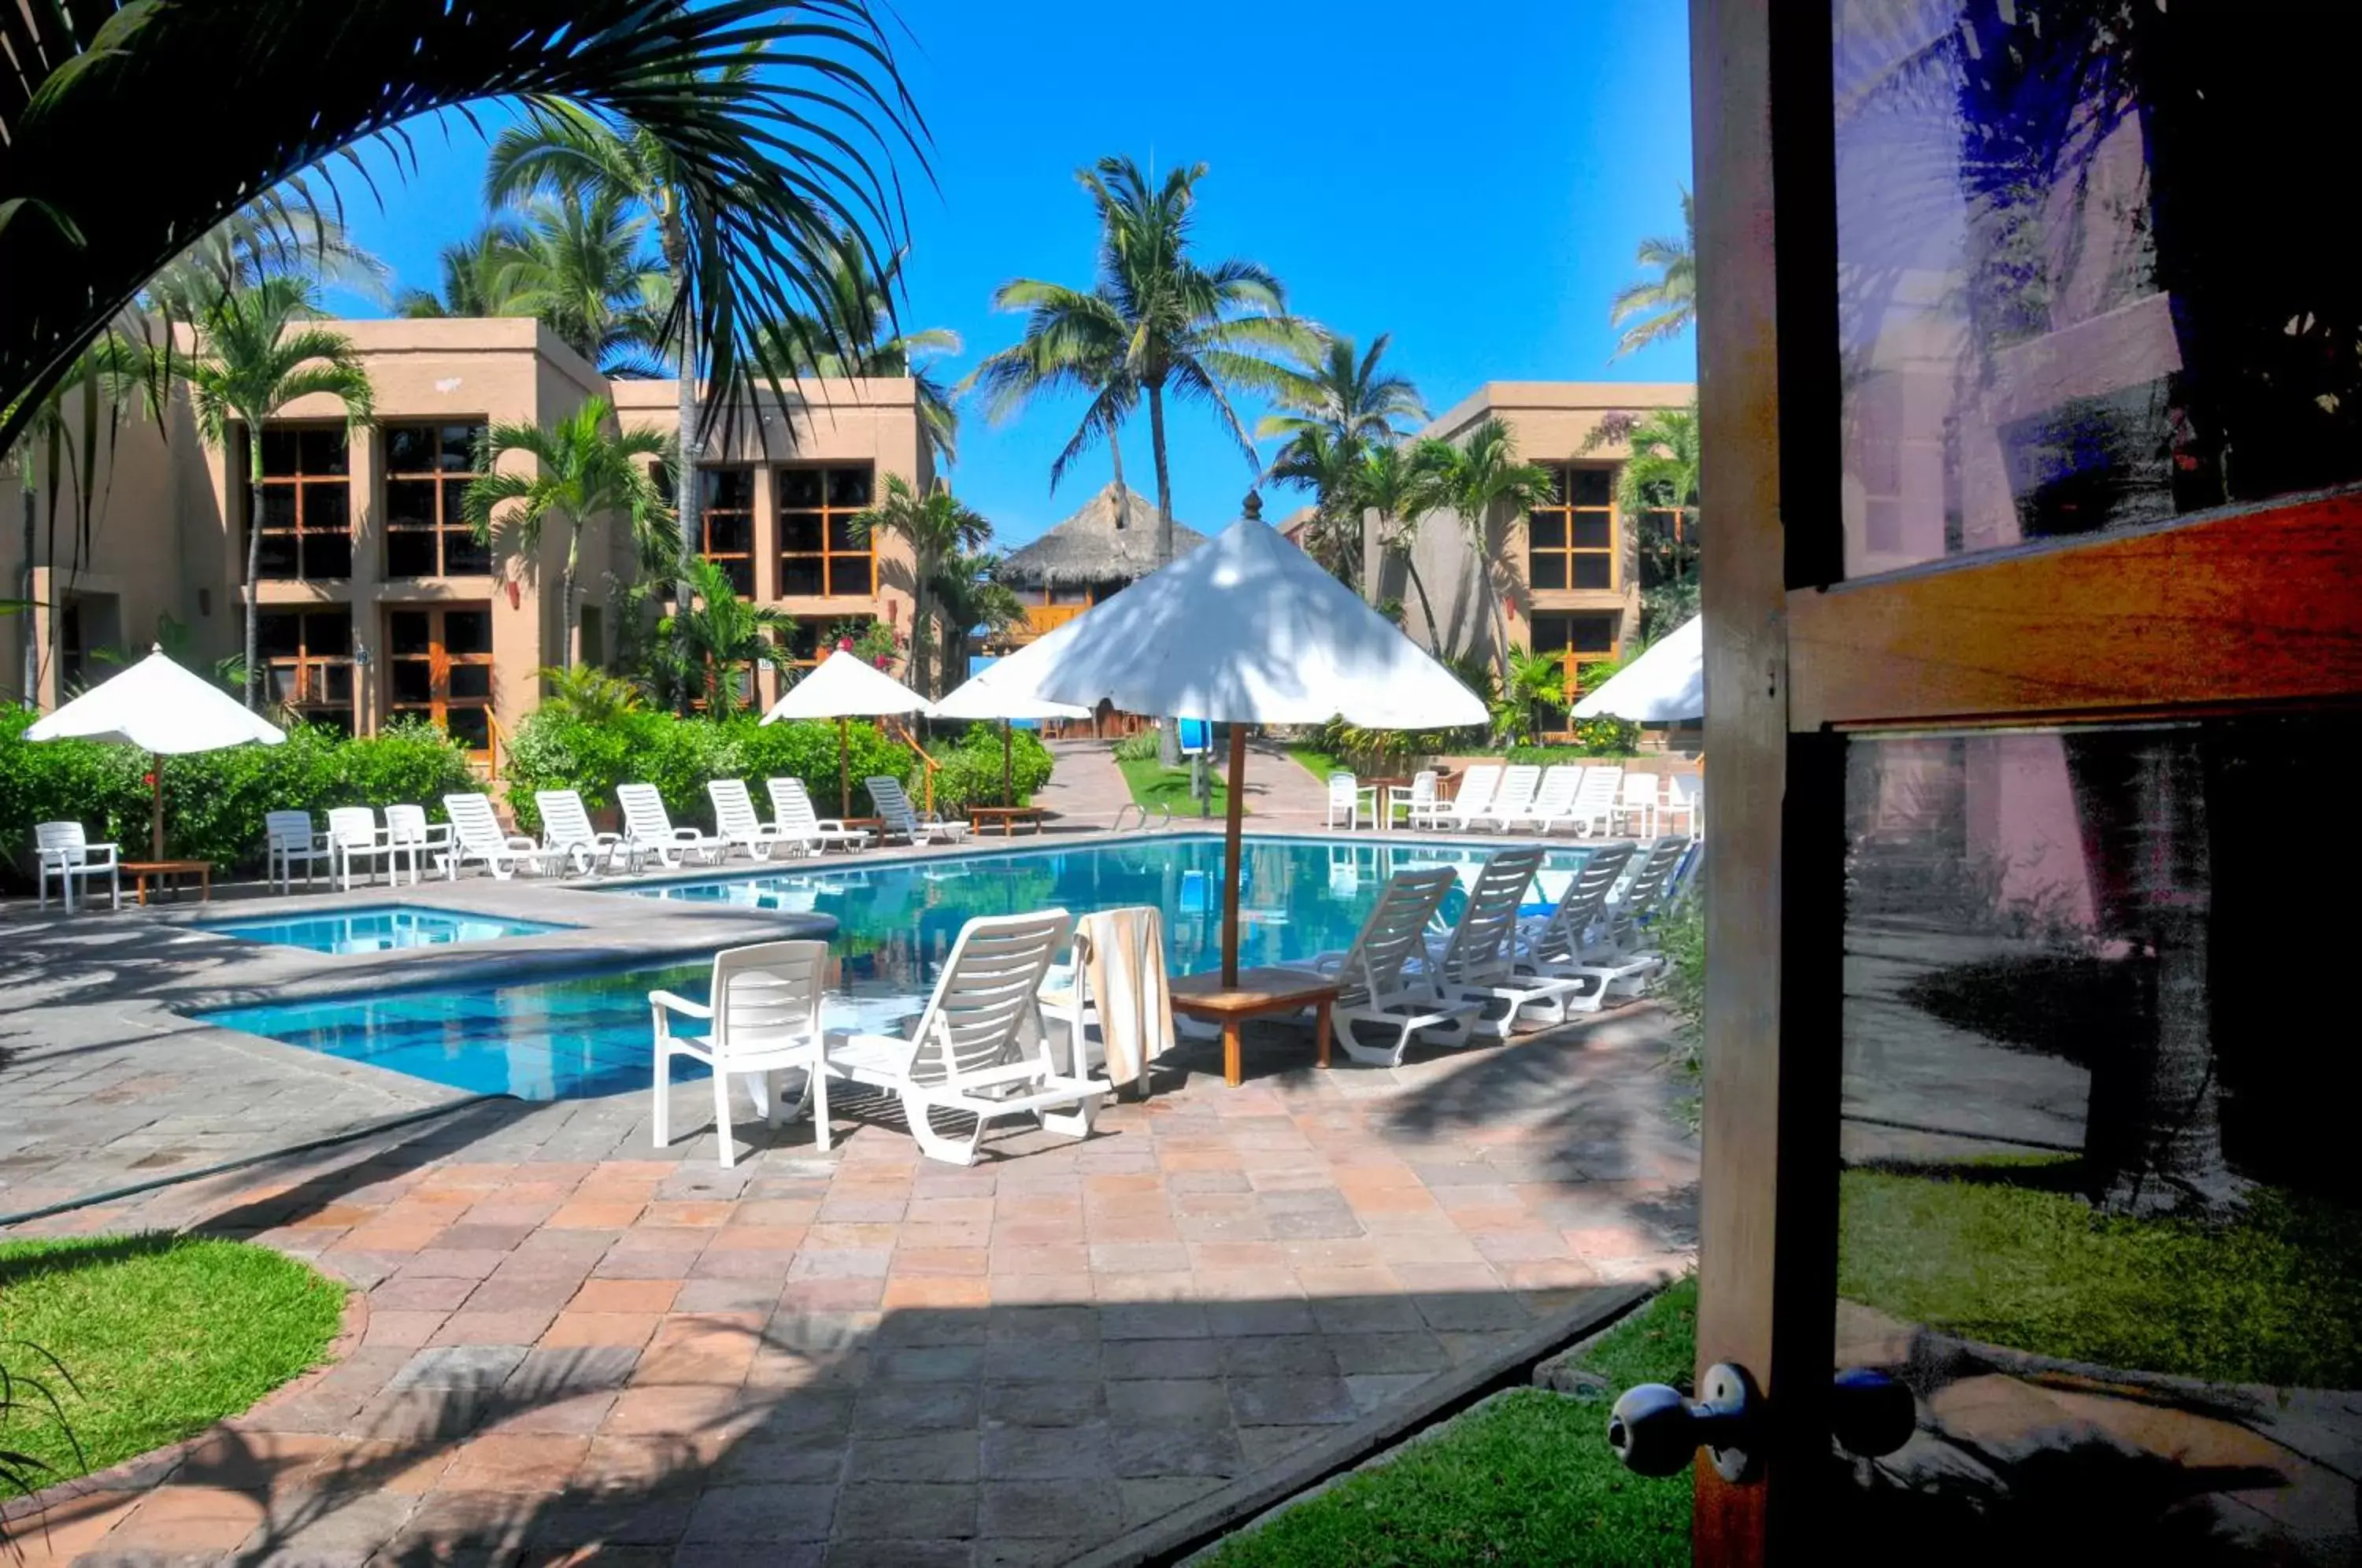 Swimming Pool in Villas El Rancho Green Resort